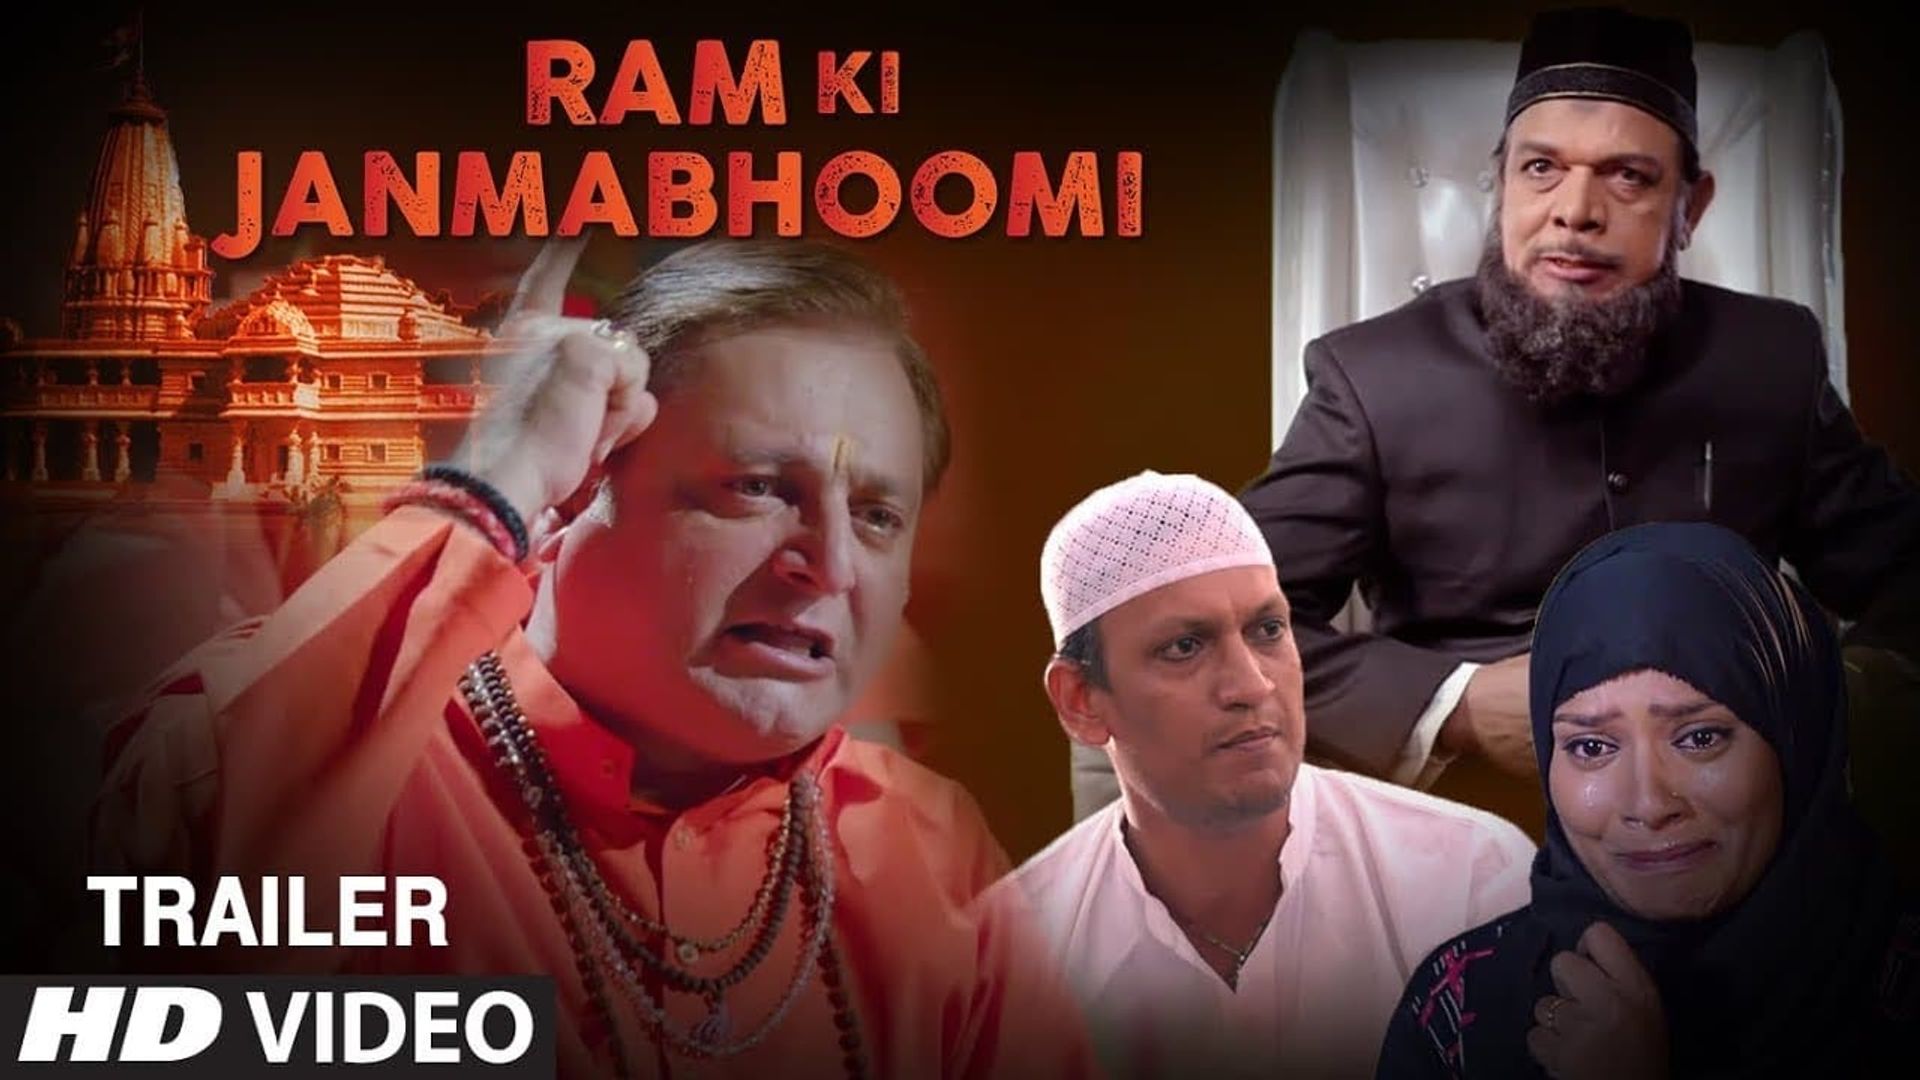 Ram Ki Janmabhoomi background